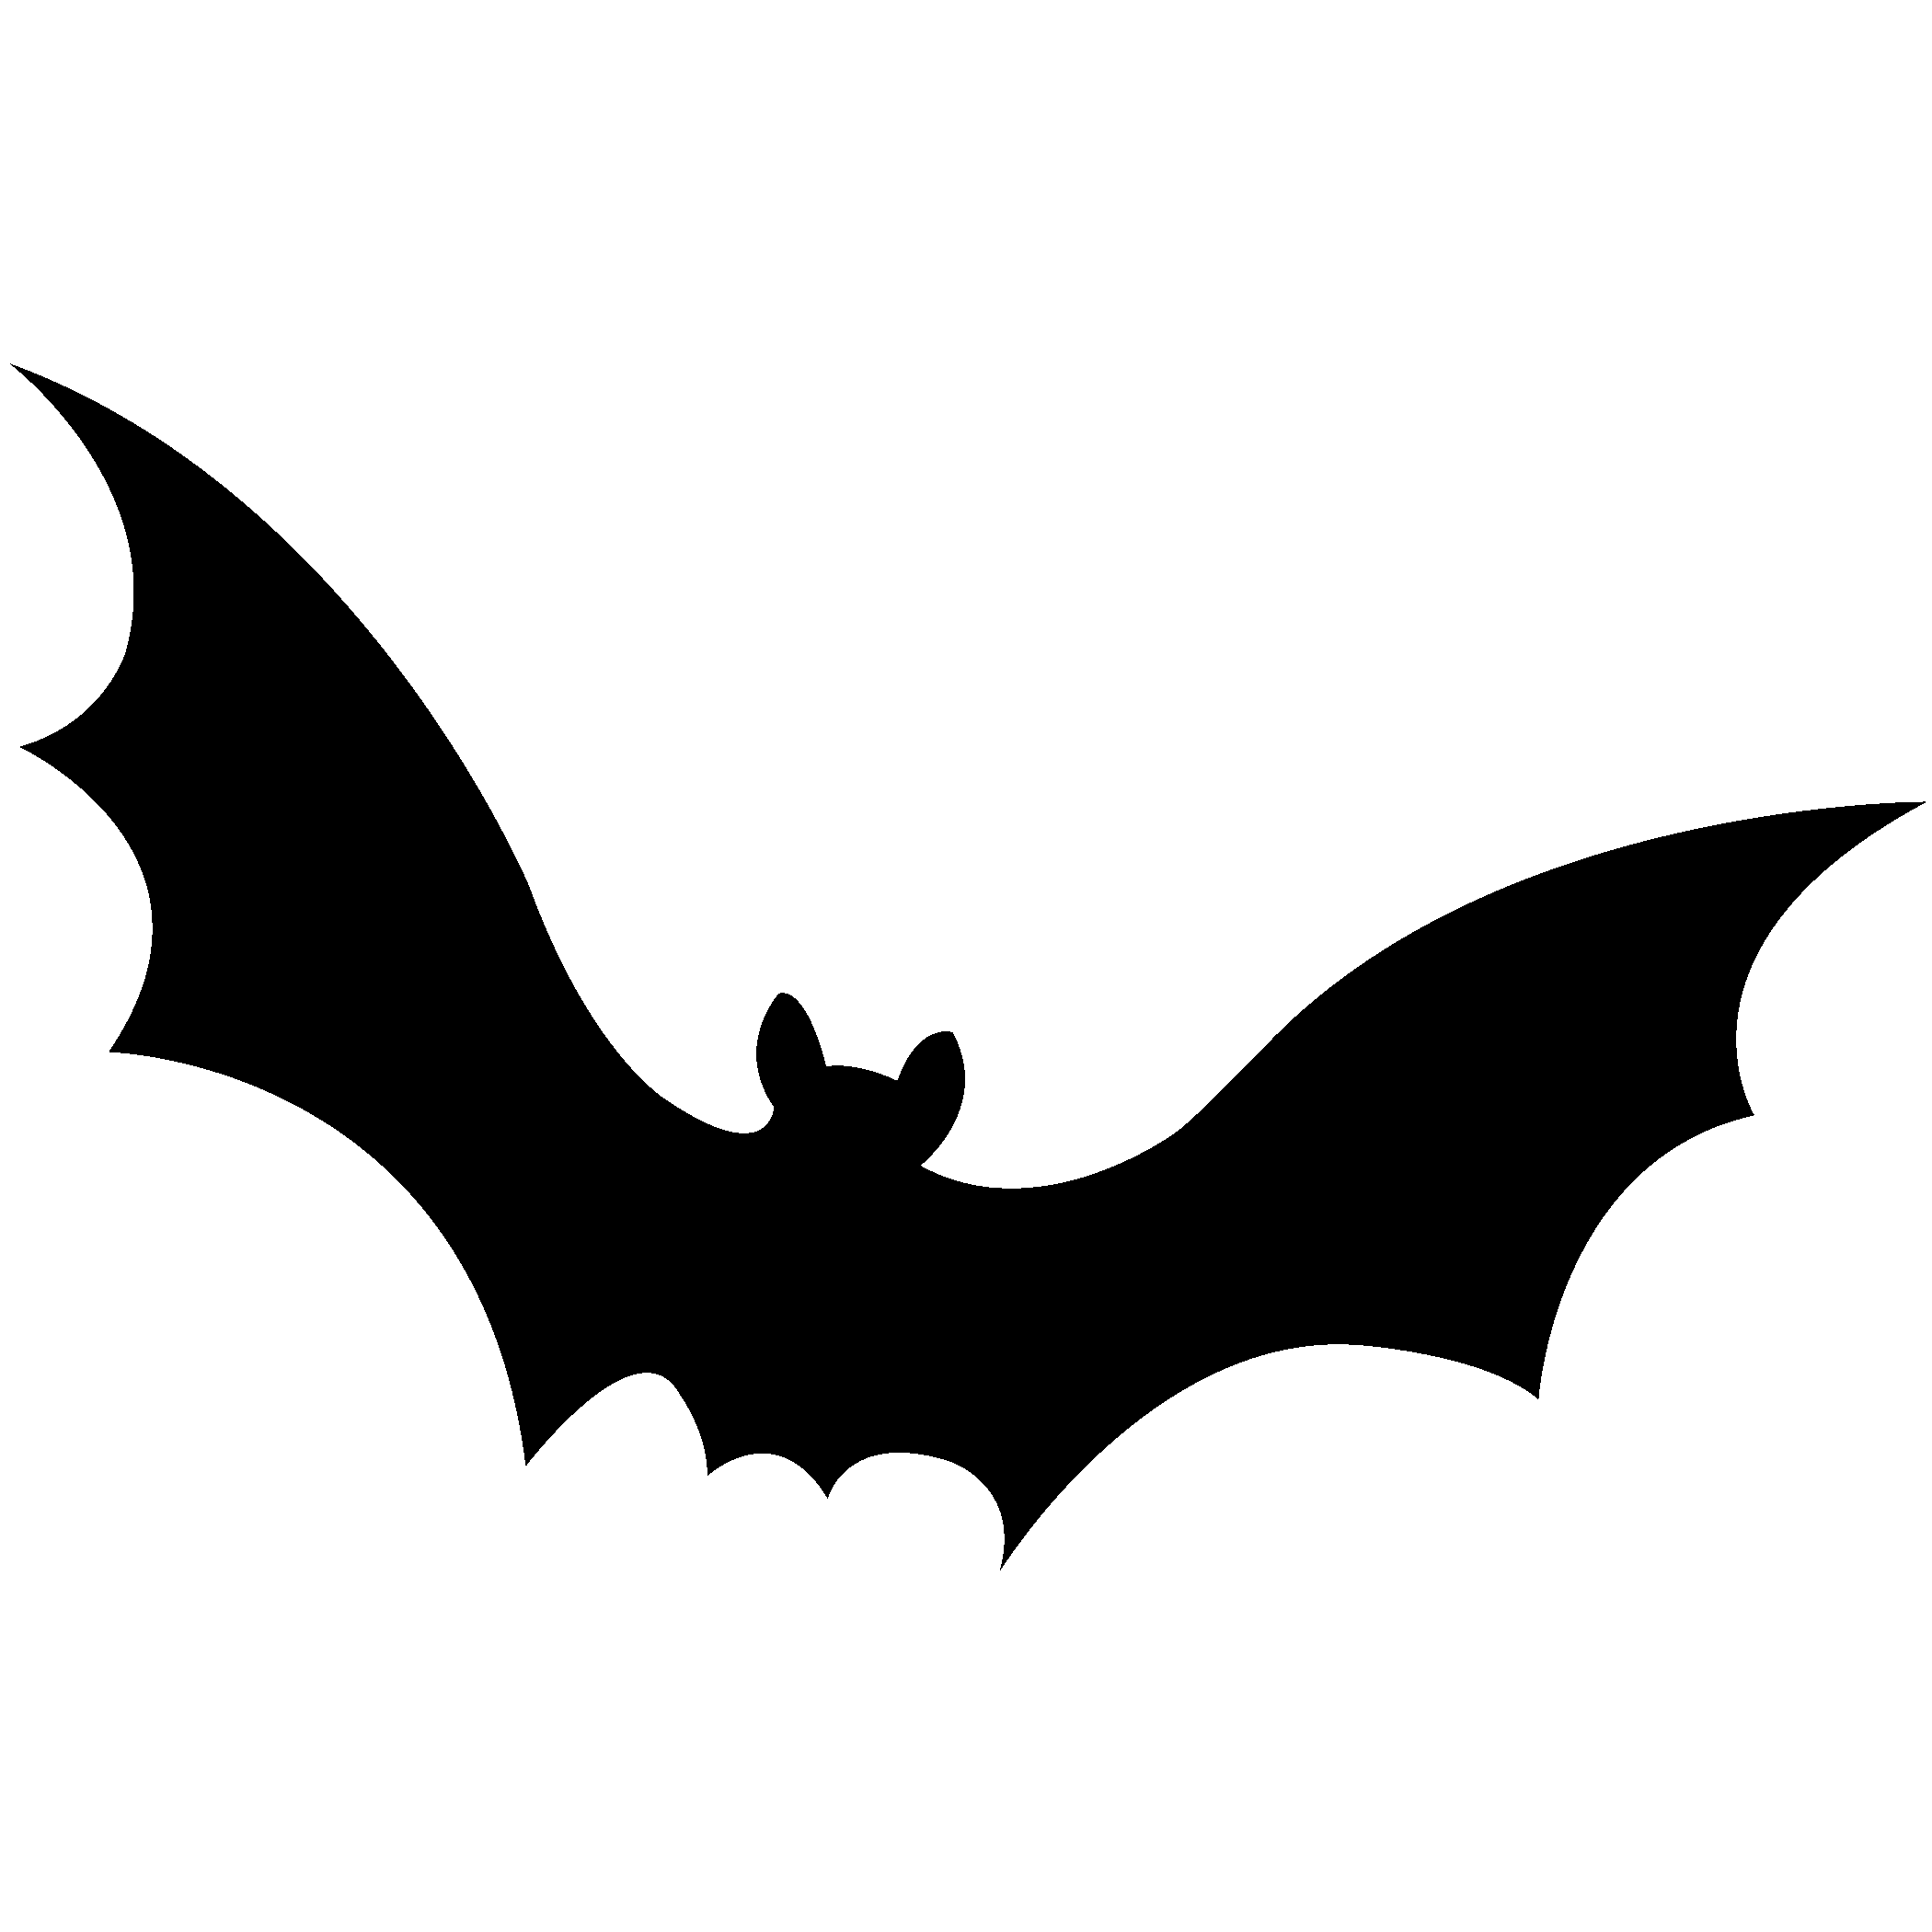 Free Bat Outline, Download Free Bat Outline png images, Free ClipArts